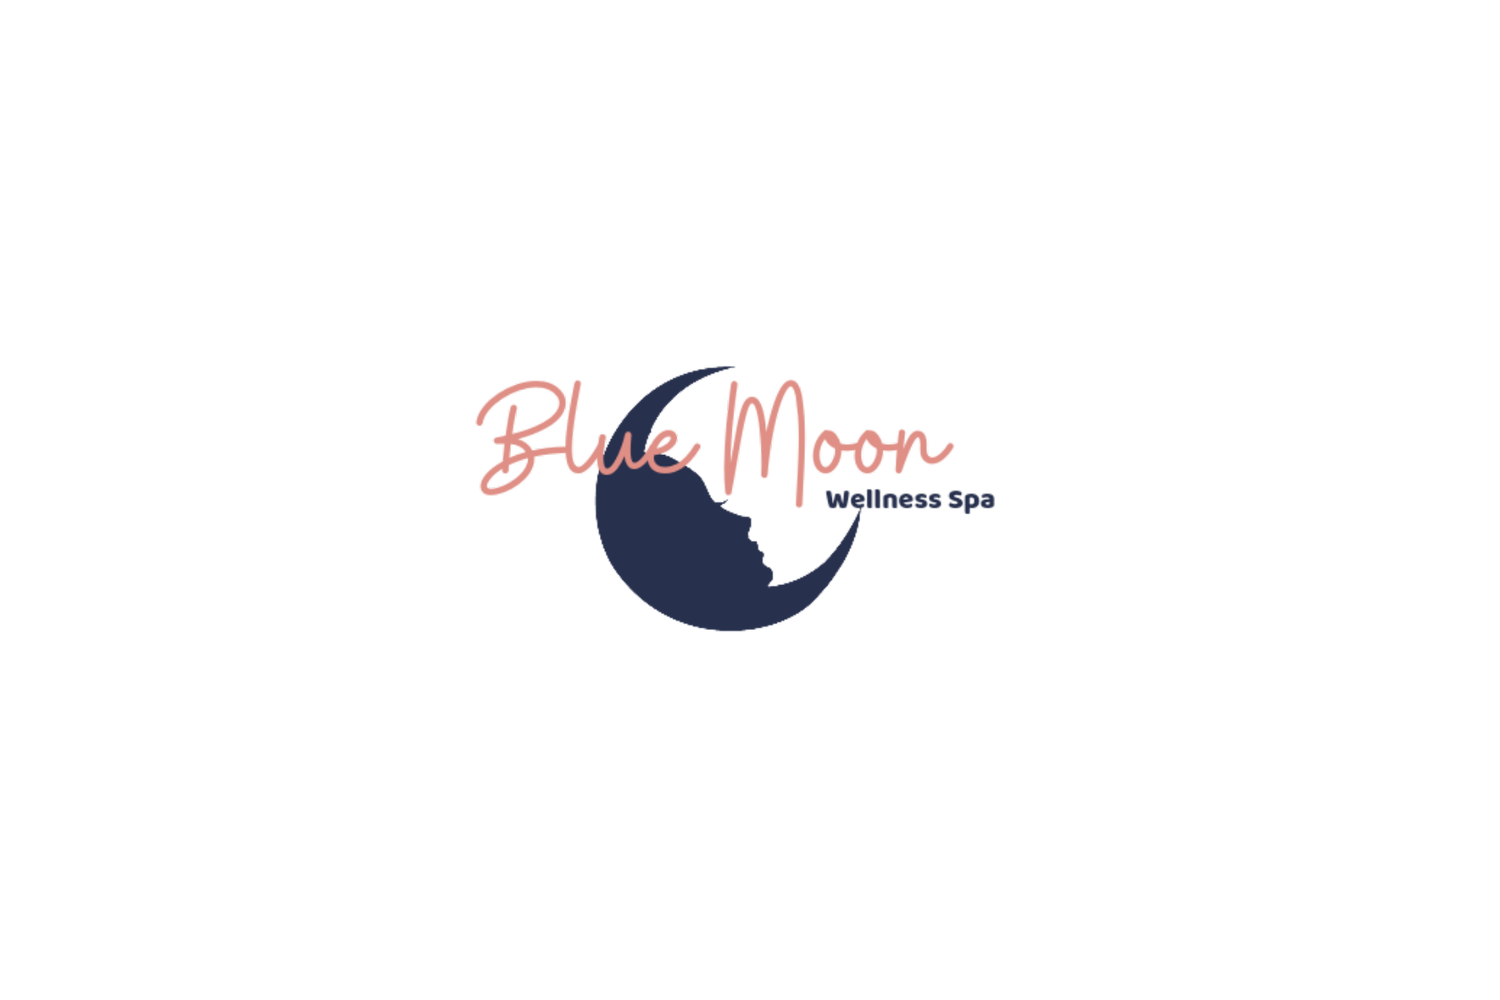 Blue Moon Wellness Spa